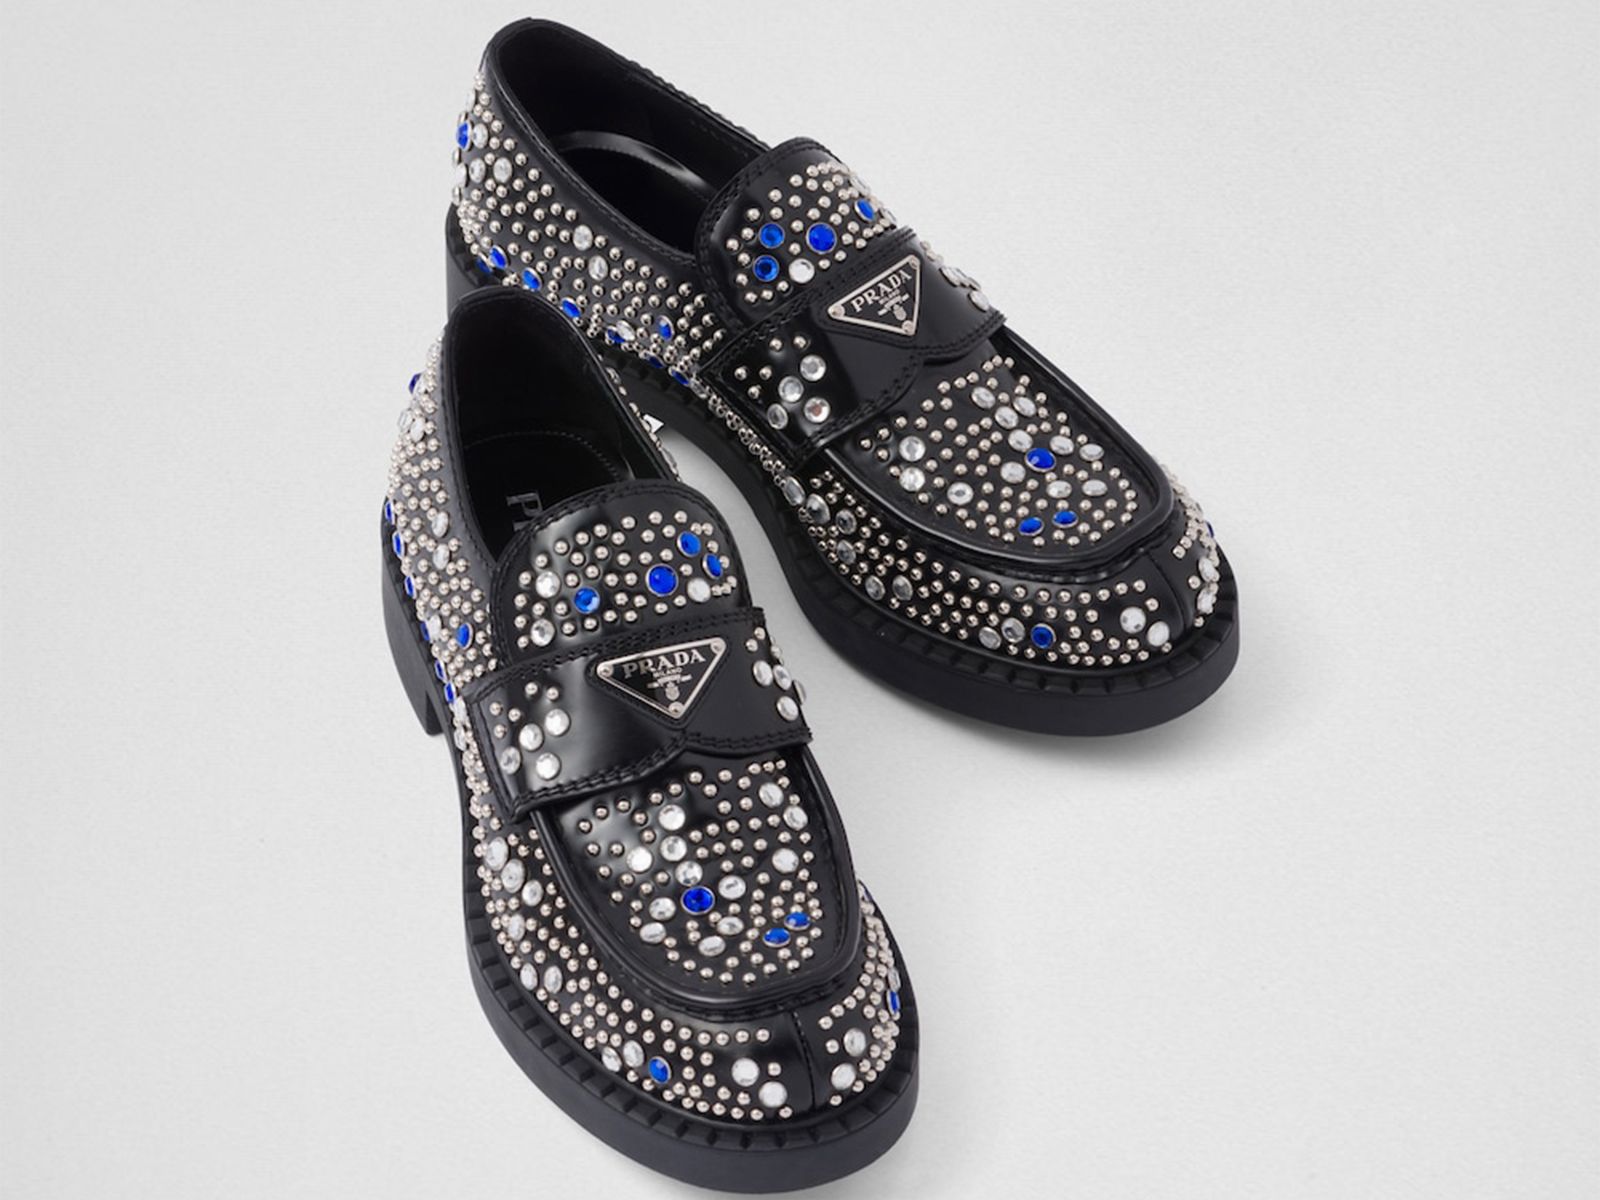 Prada’s new loafers are designed to shine